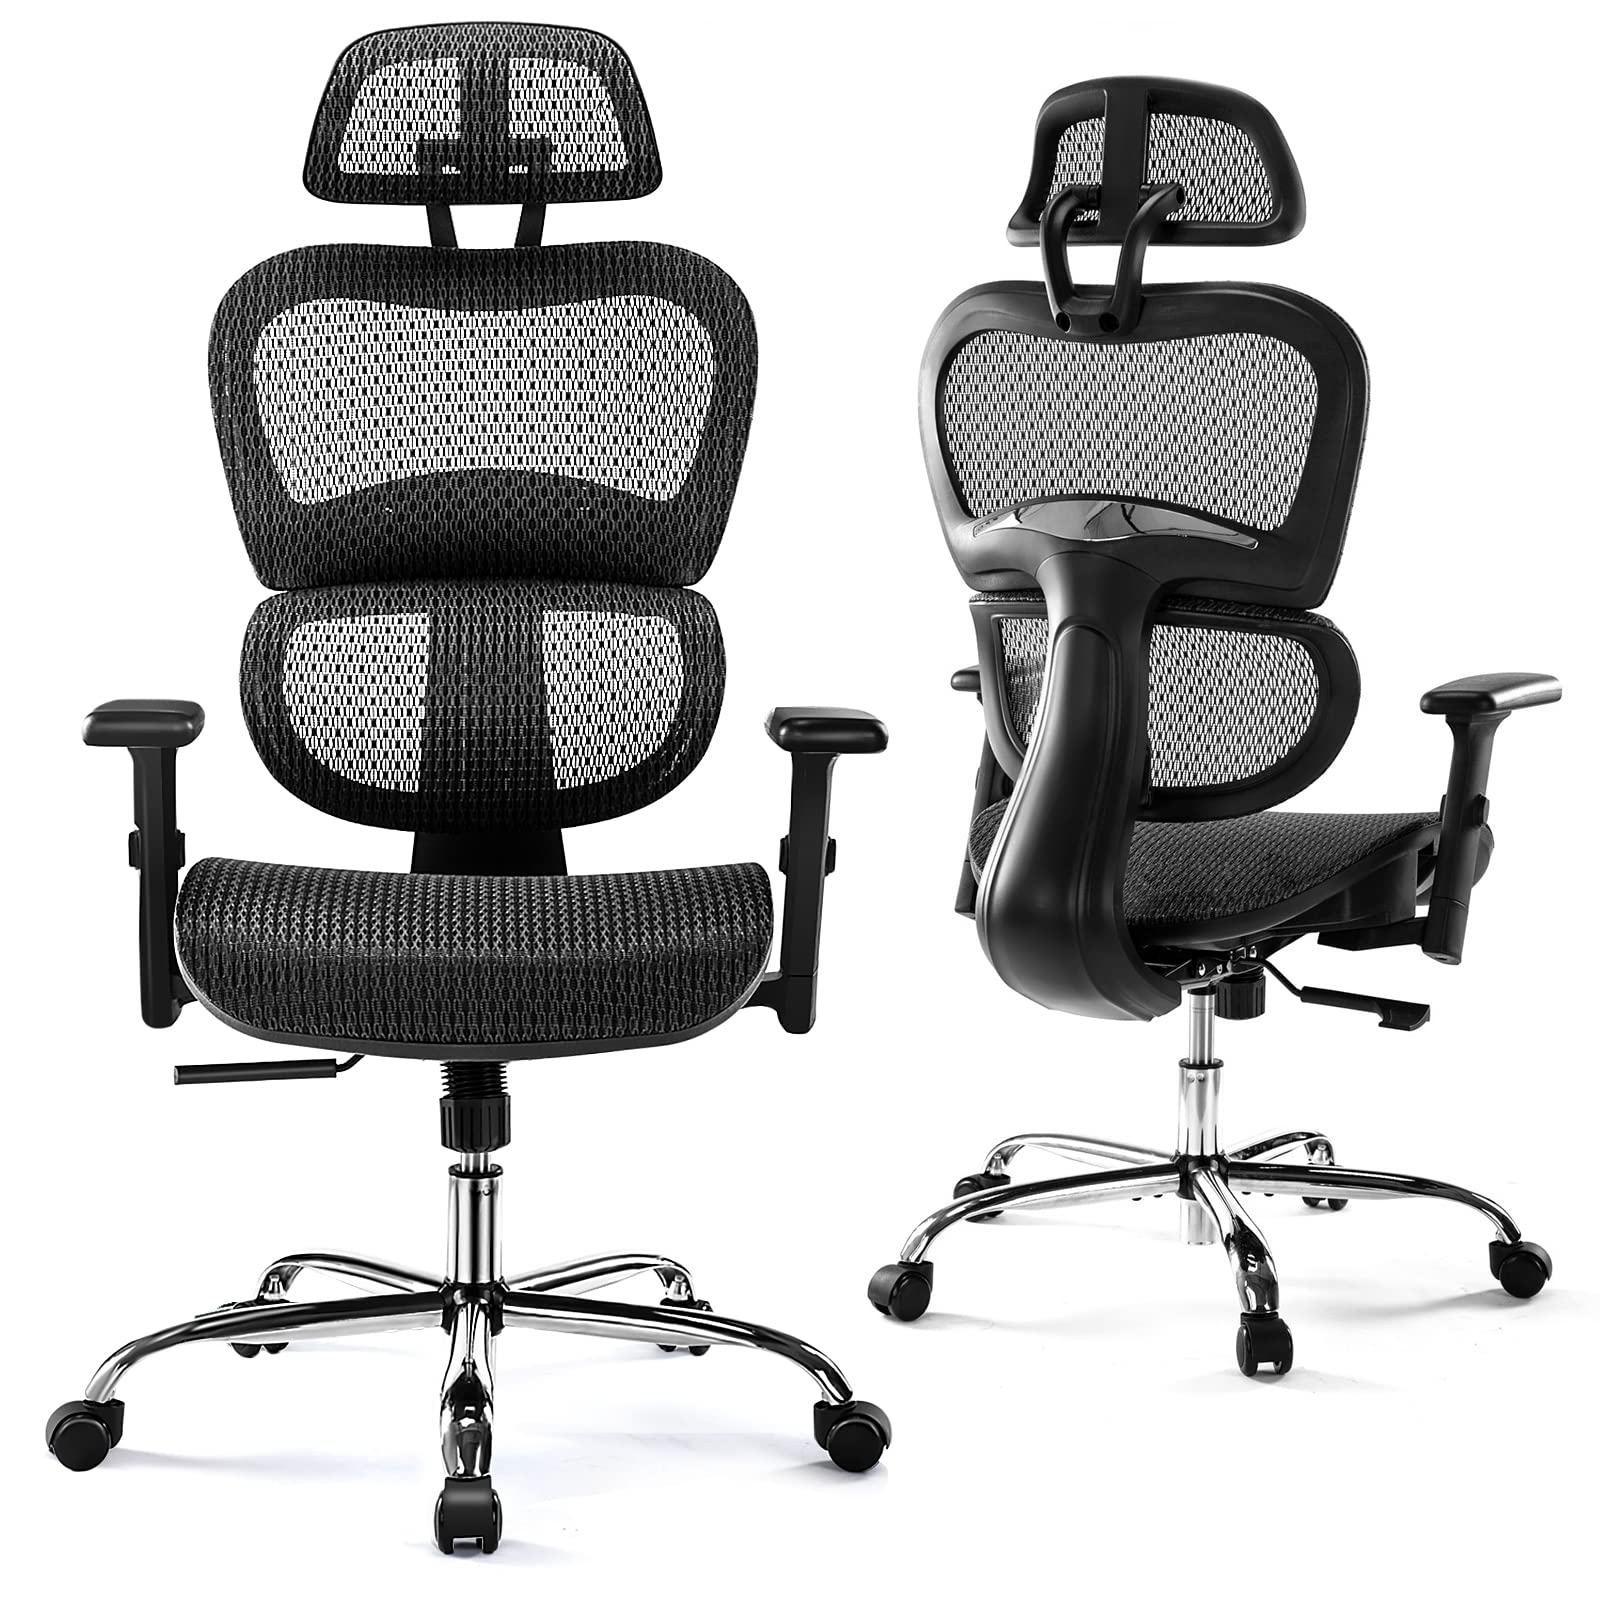 JHK Ergonomic High Back Swivel Mesh Office Chair (Night Black) $64.41 YMMV + Free Shipping